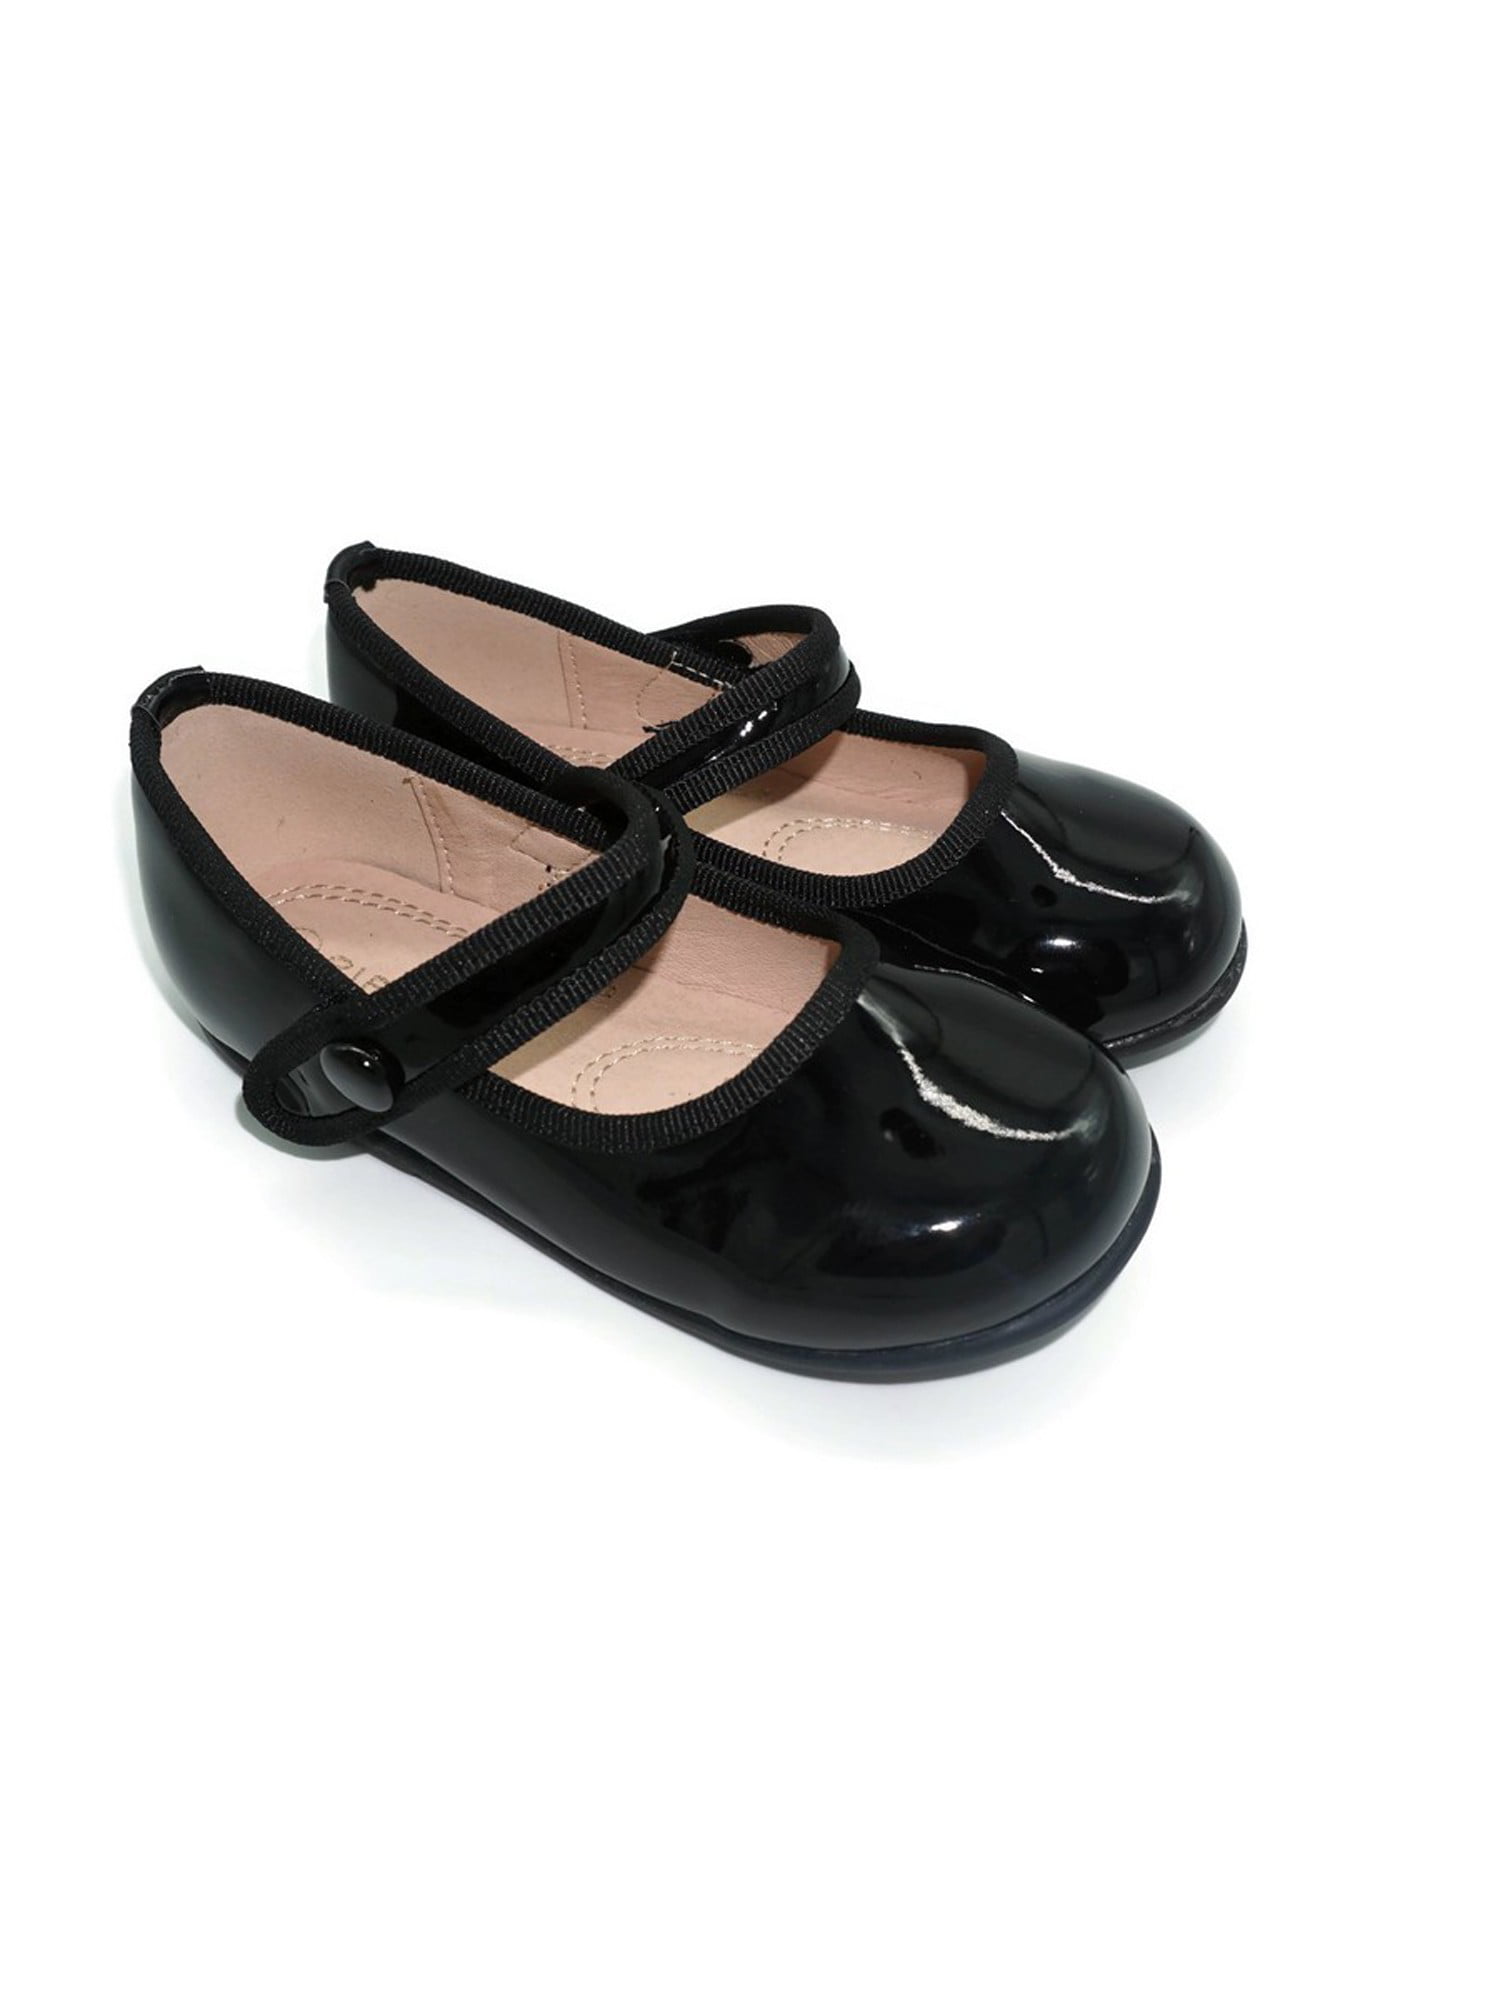 Angel Little Girls Black Patent Grosgrain Bow Mary Jane Shoes 5-7 Toddler 